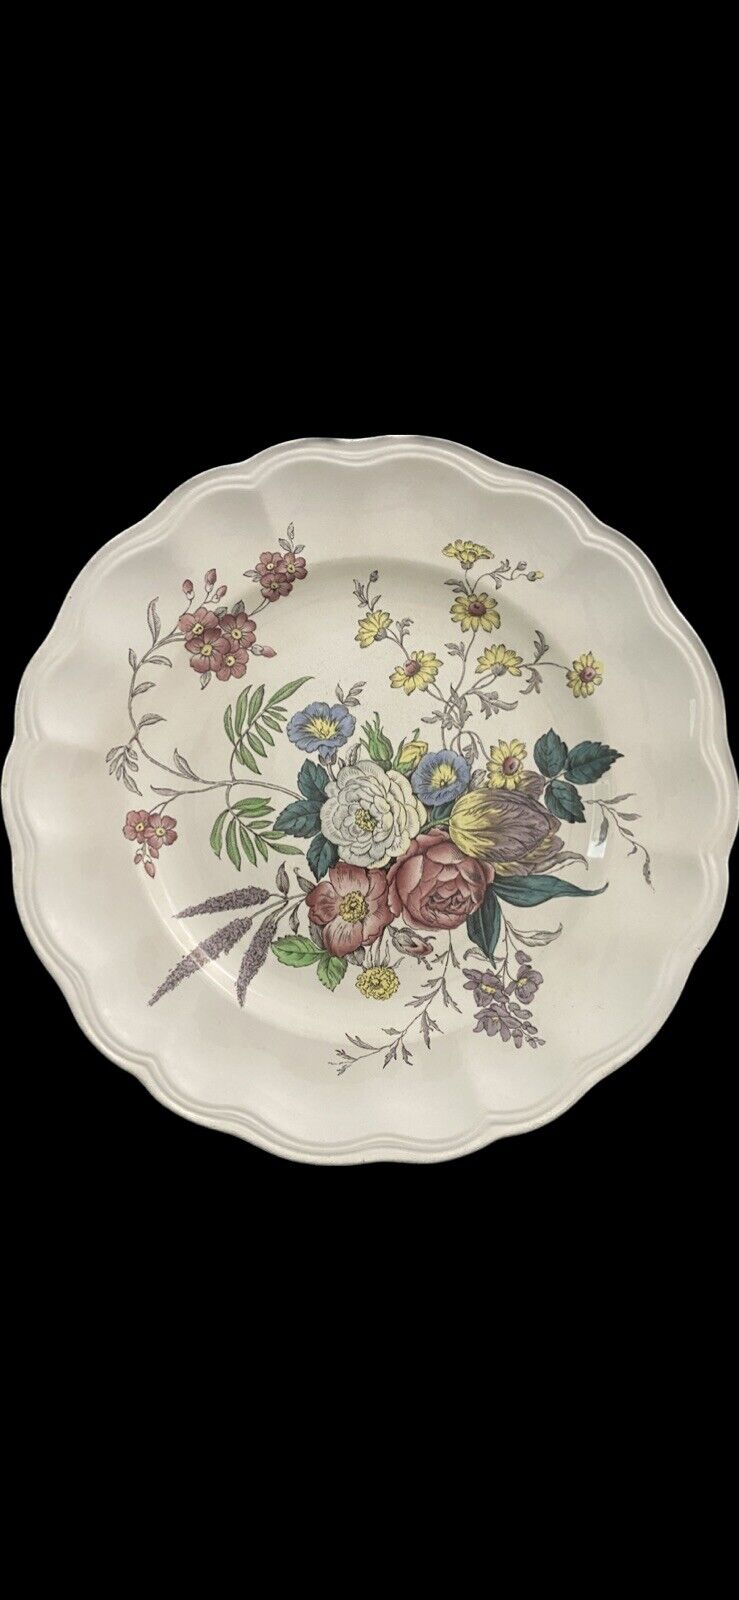 Copeland Spode Dinner Plate; Gainsborough pattern, set of 5, vintage